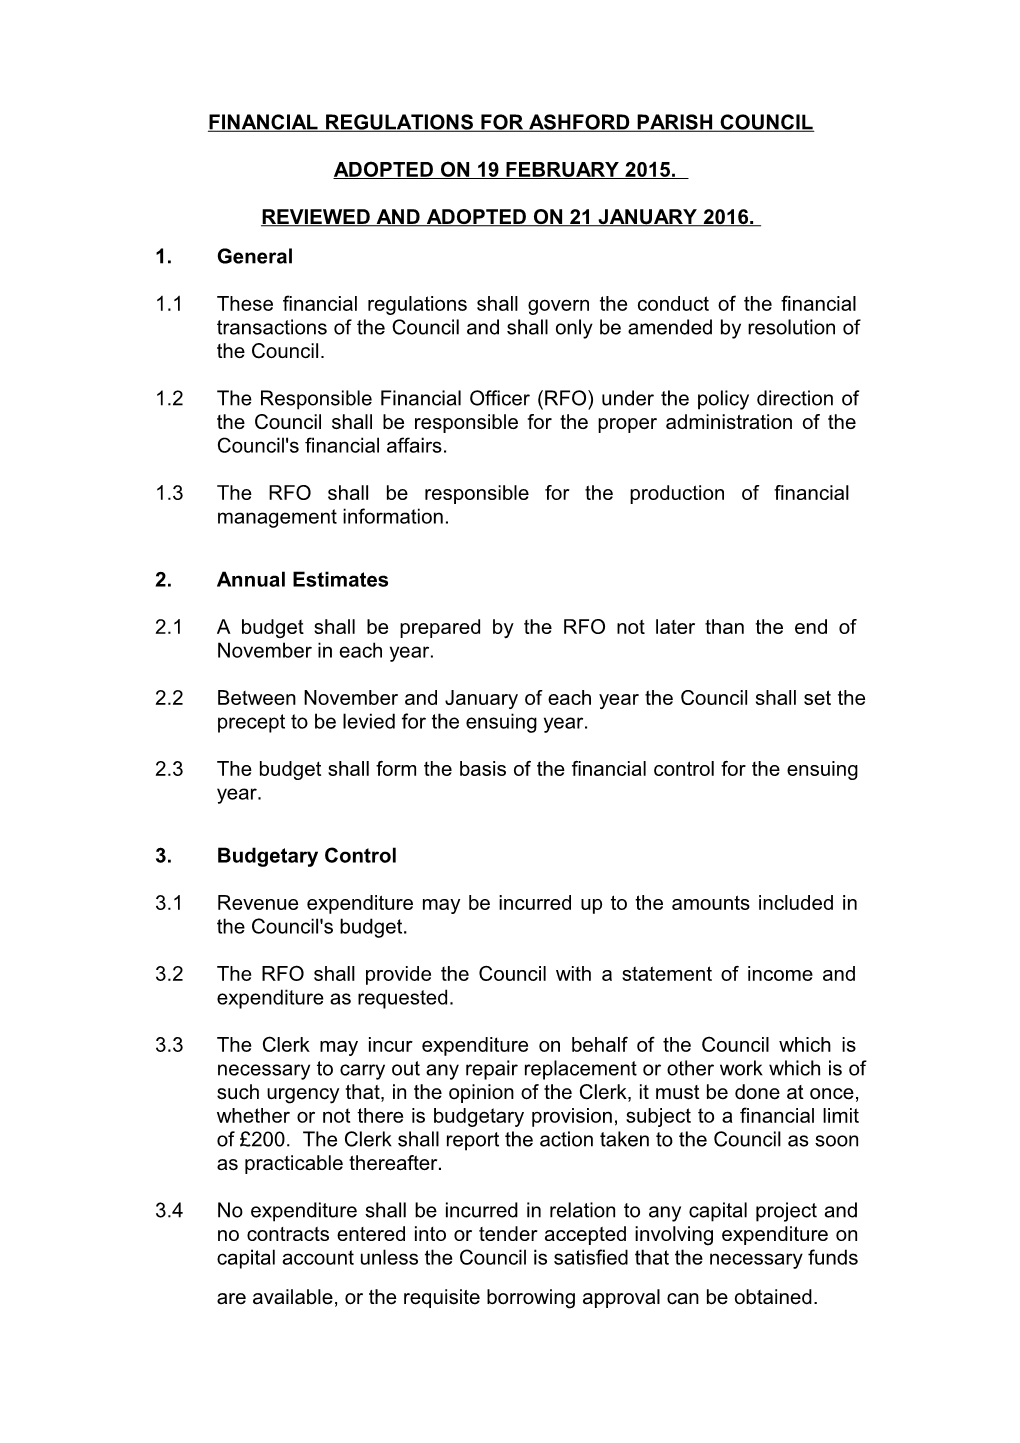 Financial Regulations for Ashford Parish Council